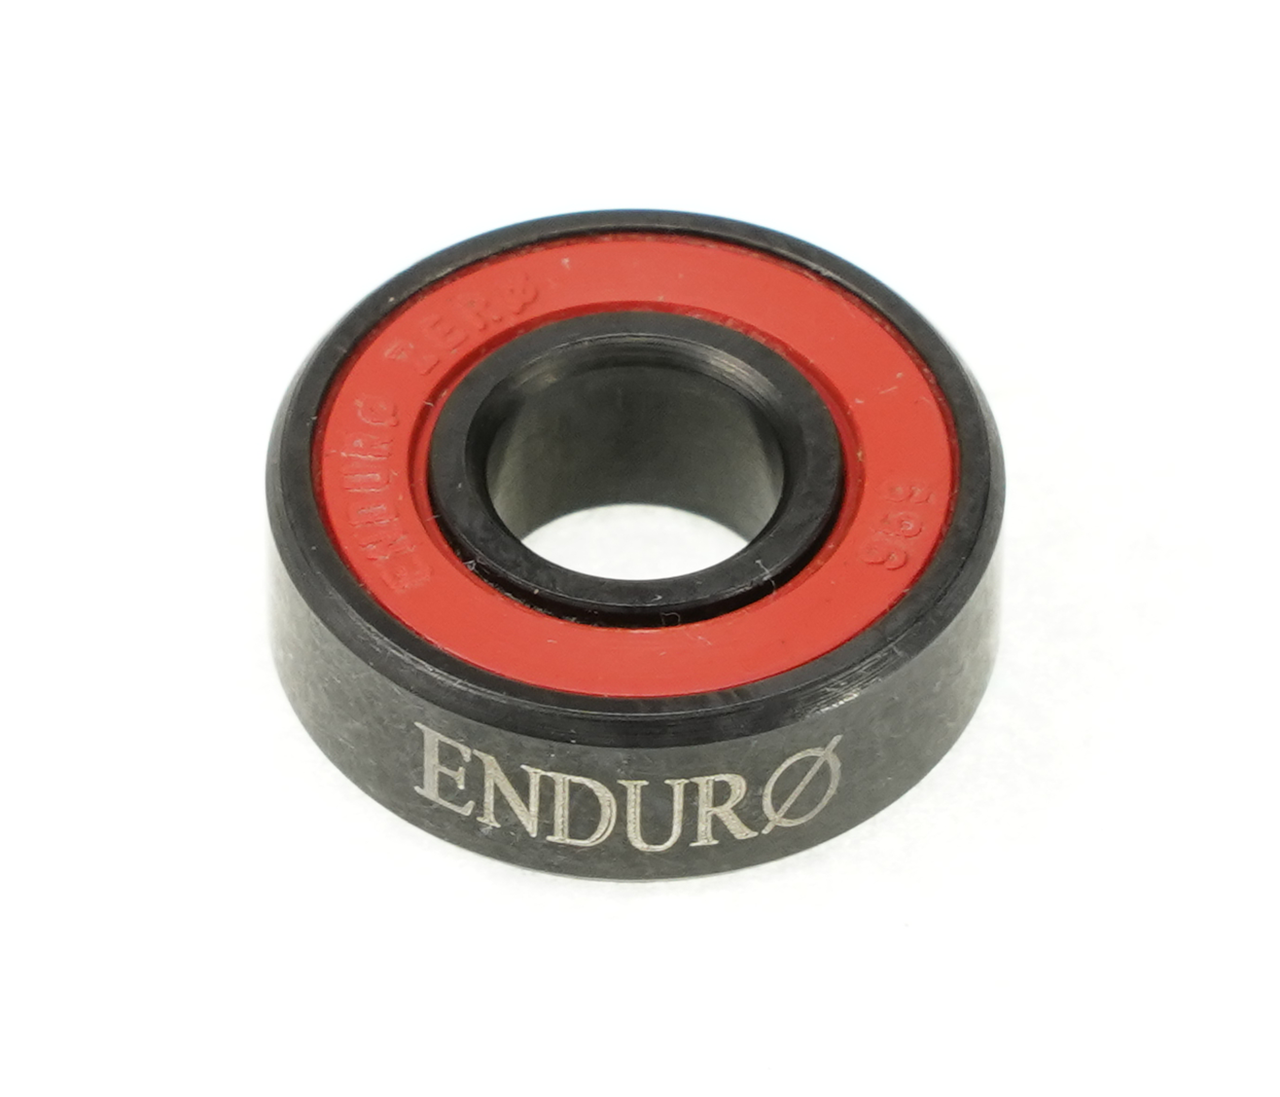 Enduro CO 696 VV - Enduro Zero, Black-Oxide, Ceramic Hybrid, ABEC-5, Radial Bearing (C3 Clearance) - 6mm x 15mm x 5mm